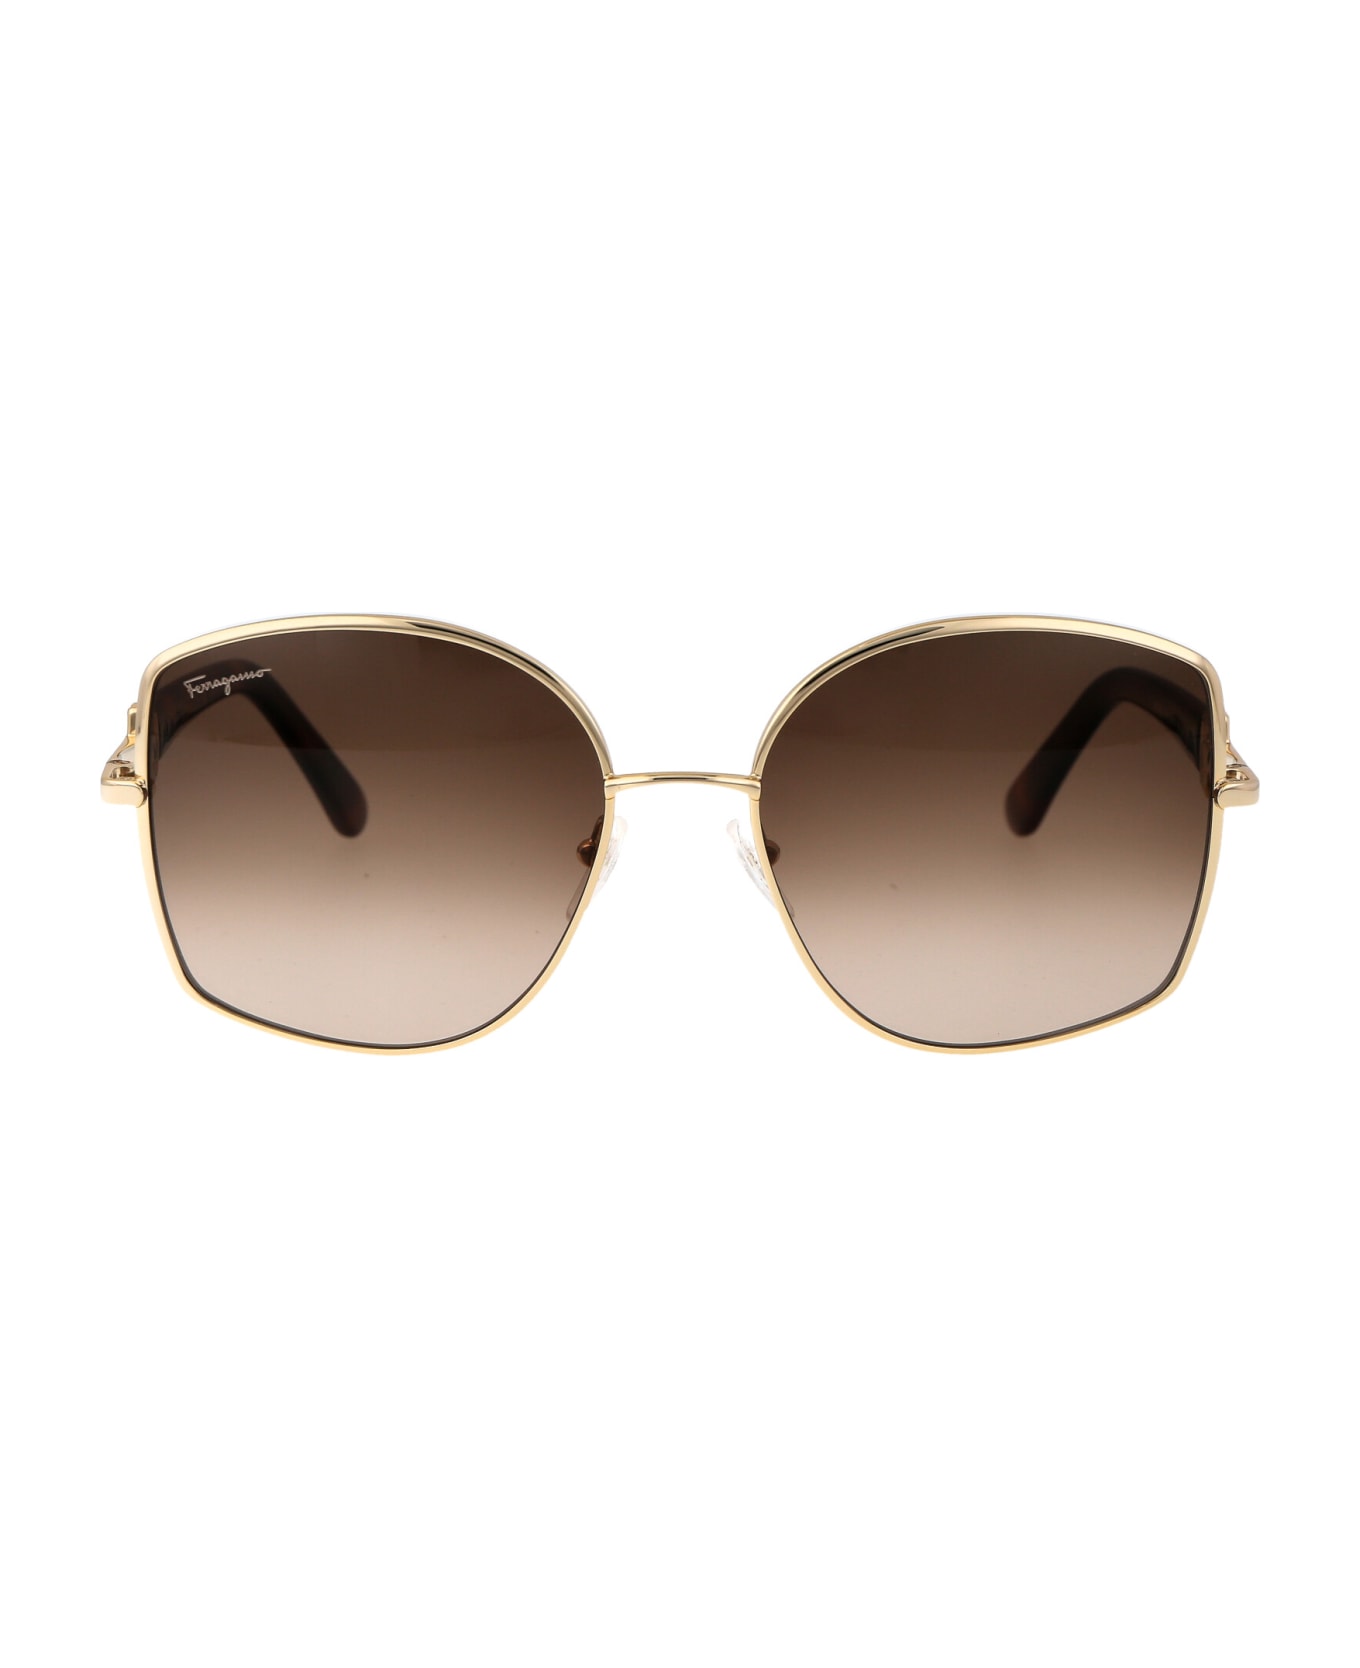 Salvatore Ferragamo Eyewear Sf304s Sunglasses - 745 GOLD